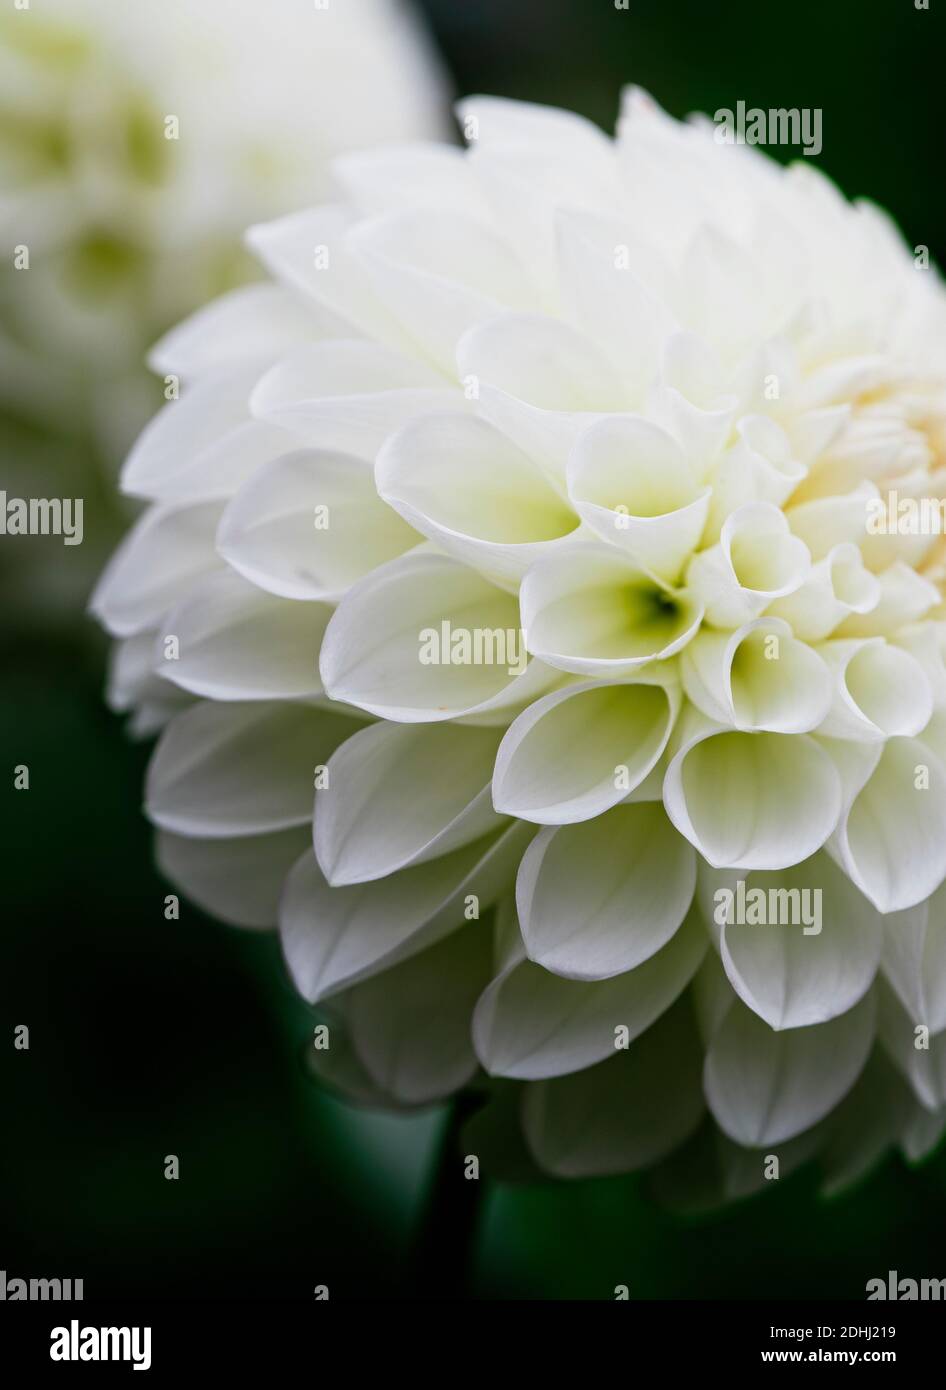 Dahlia, Single white 'pom-pom' flower growing outdoor showing petal pattern. Stock Photo